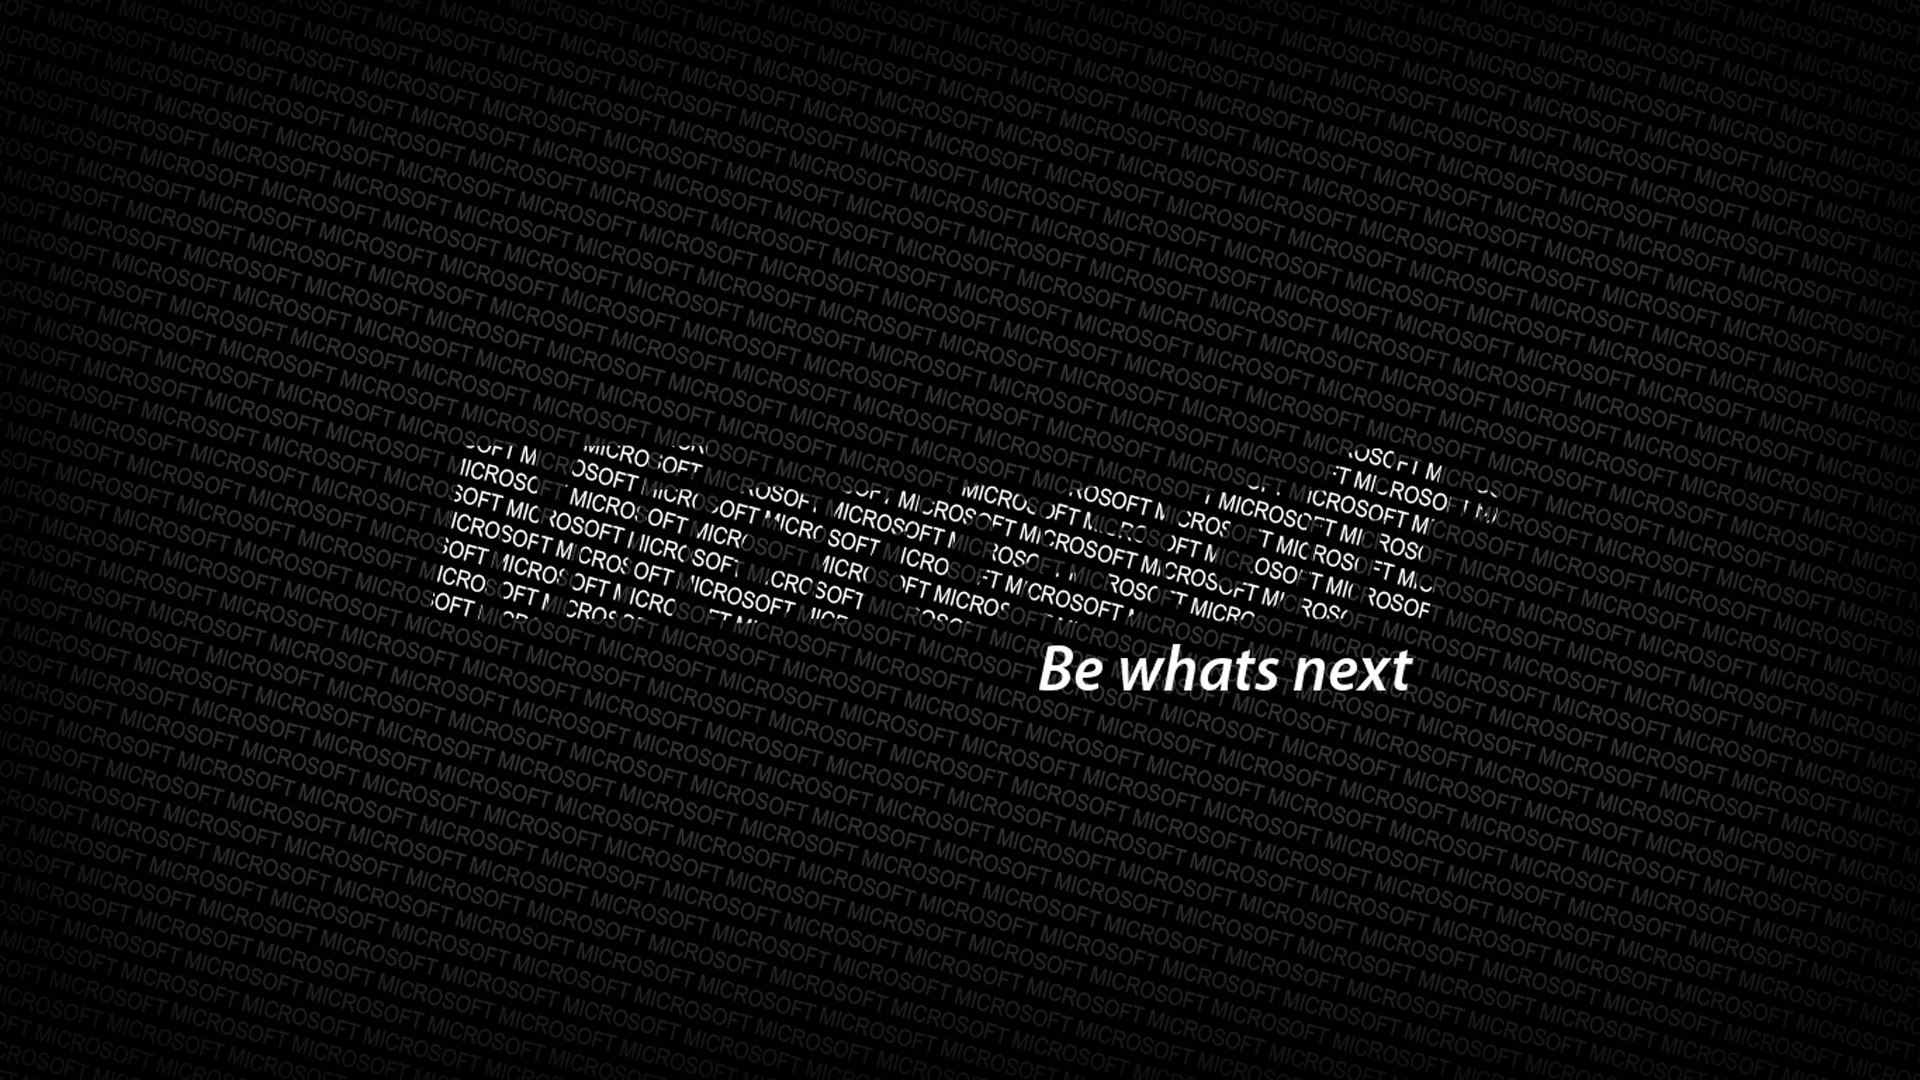  Microsoft Desktop Wallpaper Backgrounds 1920x1080